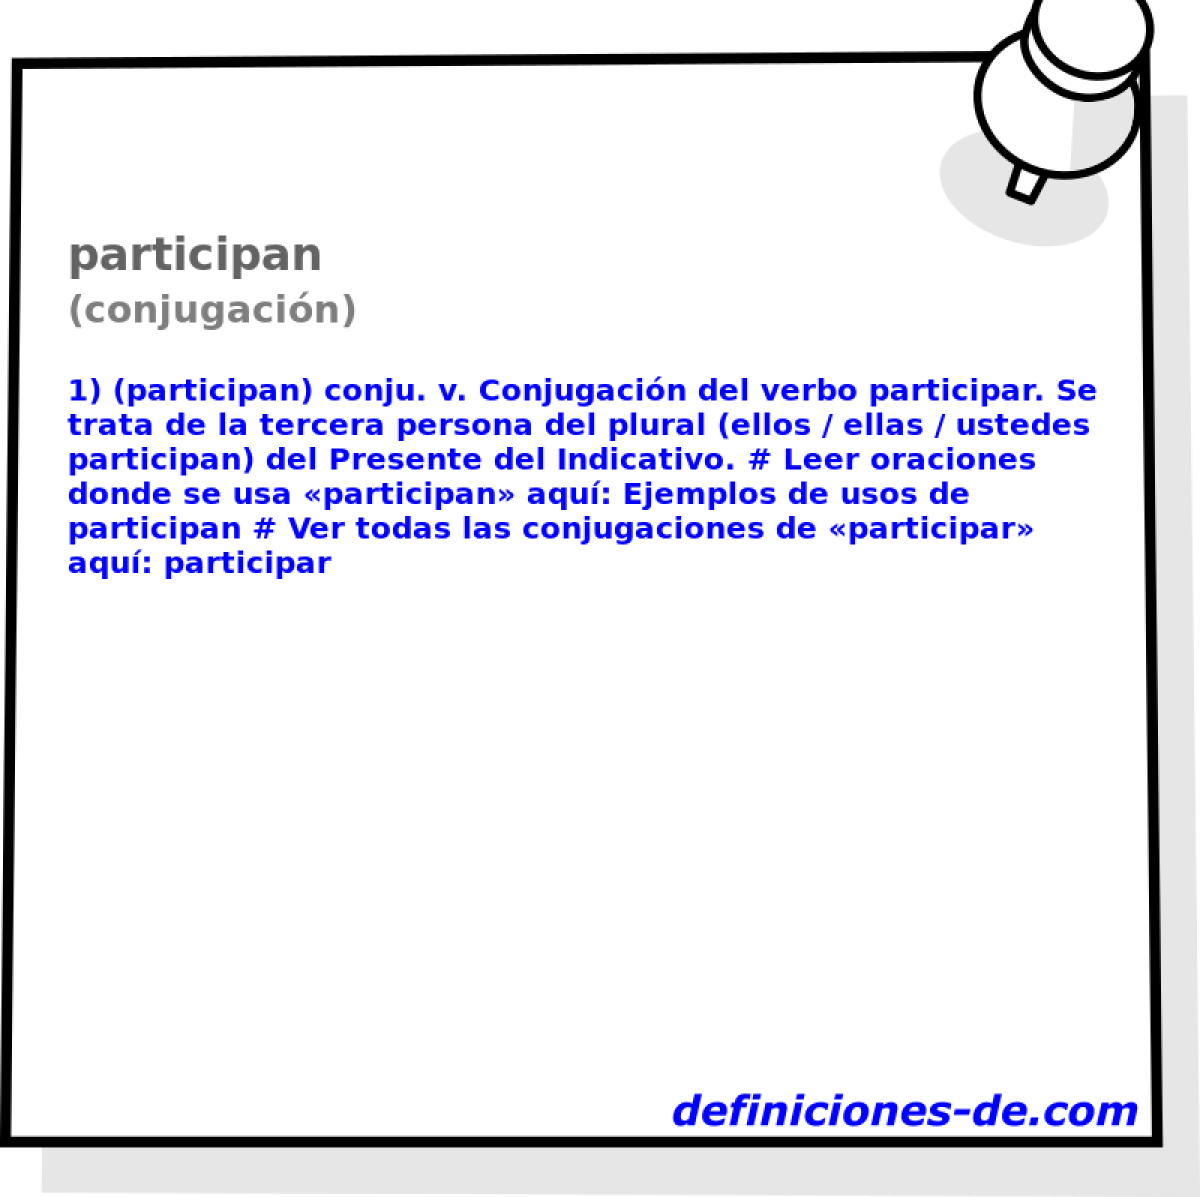 participan (conjugacin)